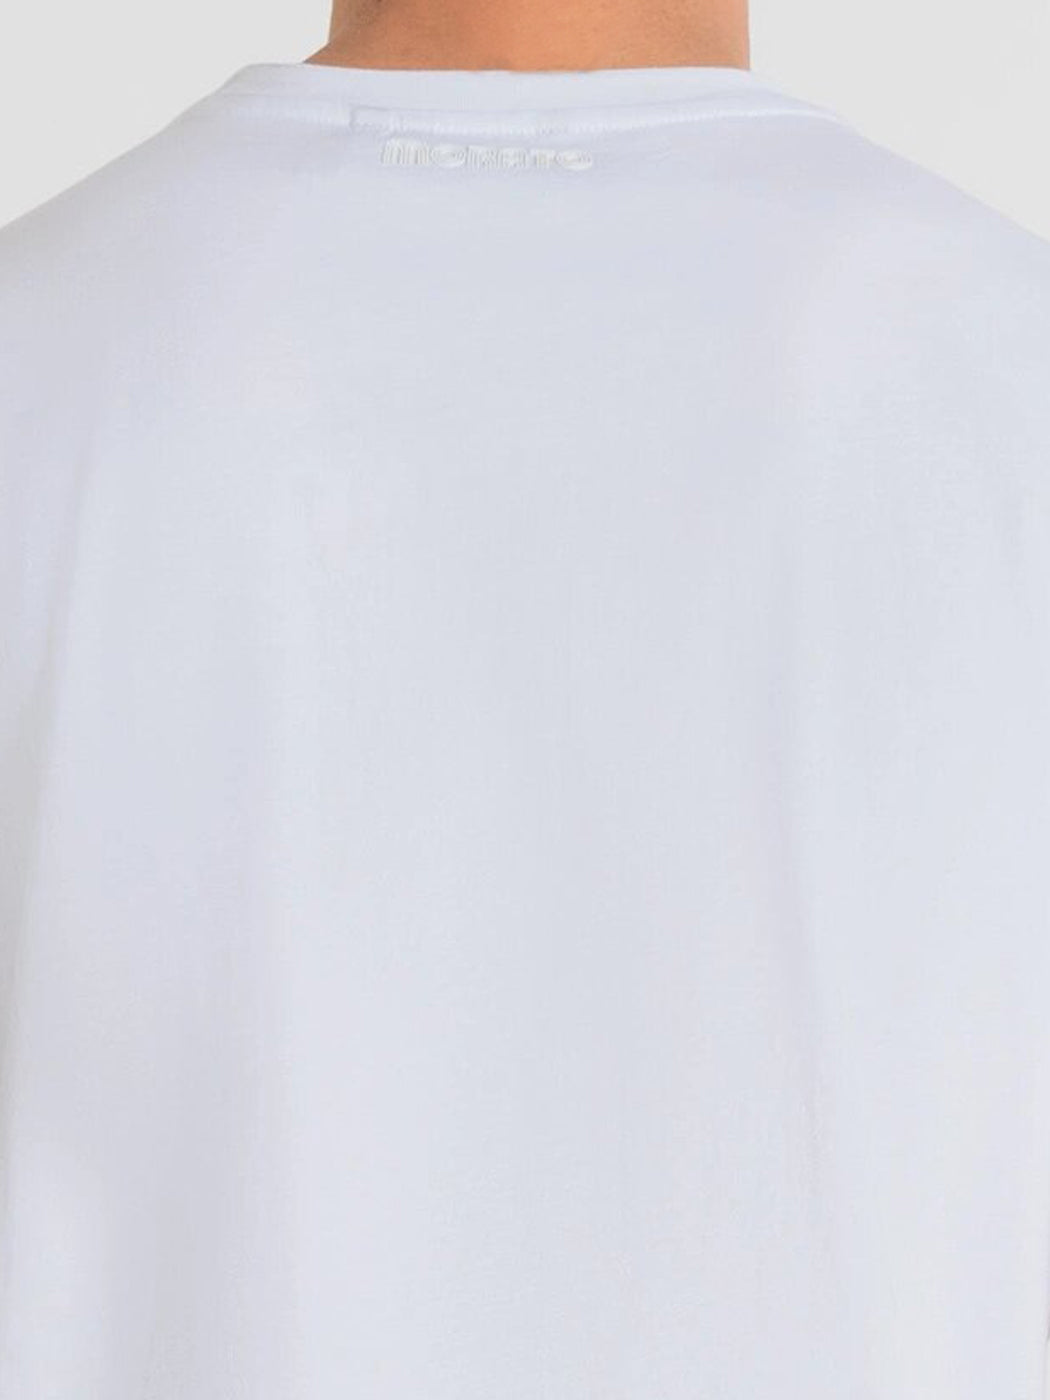 Antony Morato cotton t-shirt in regular fit